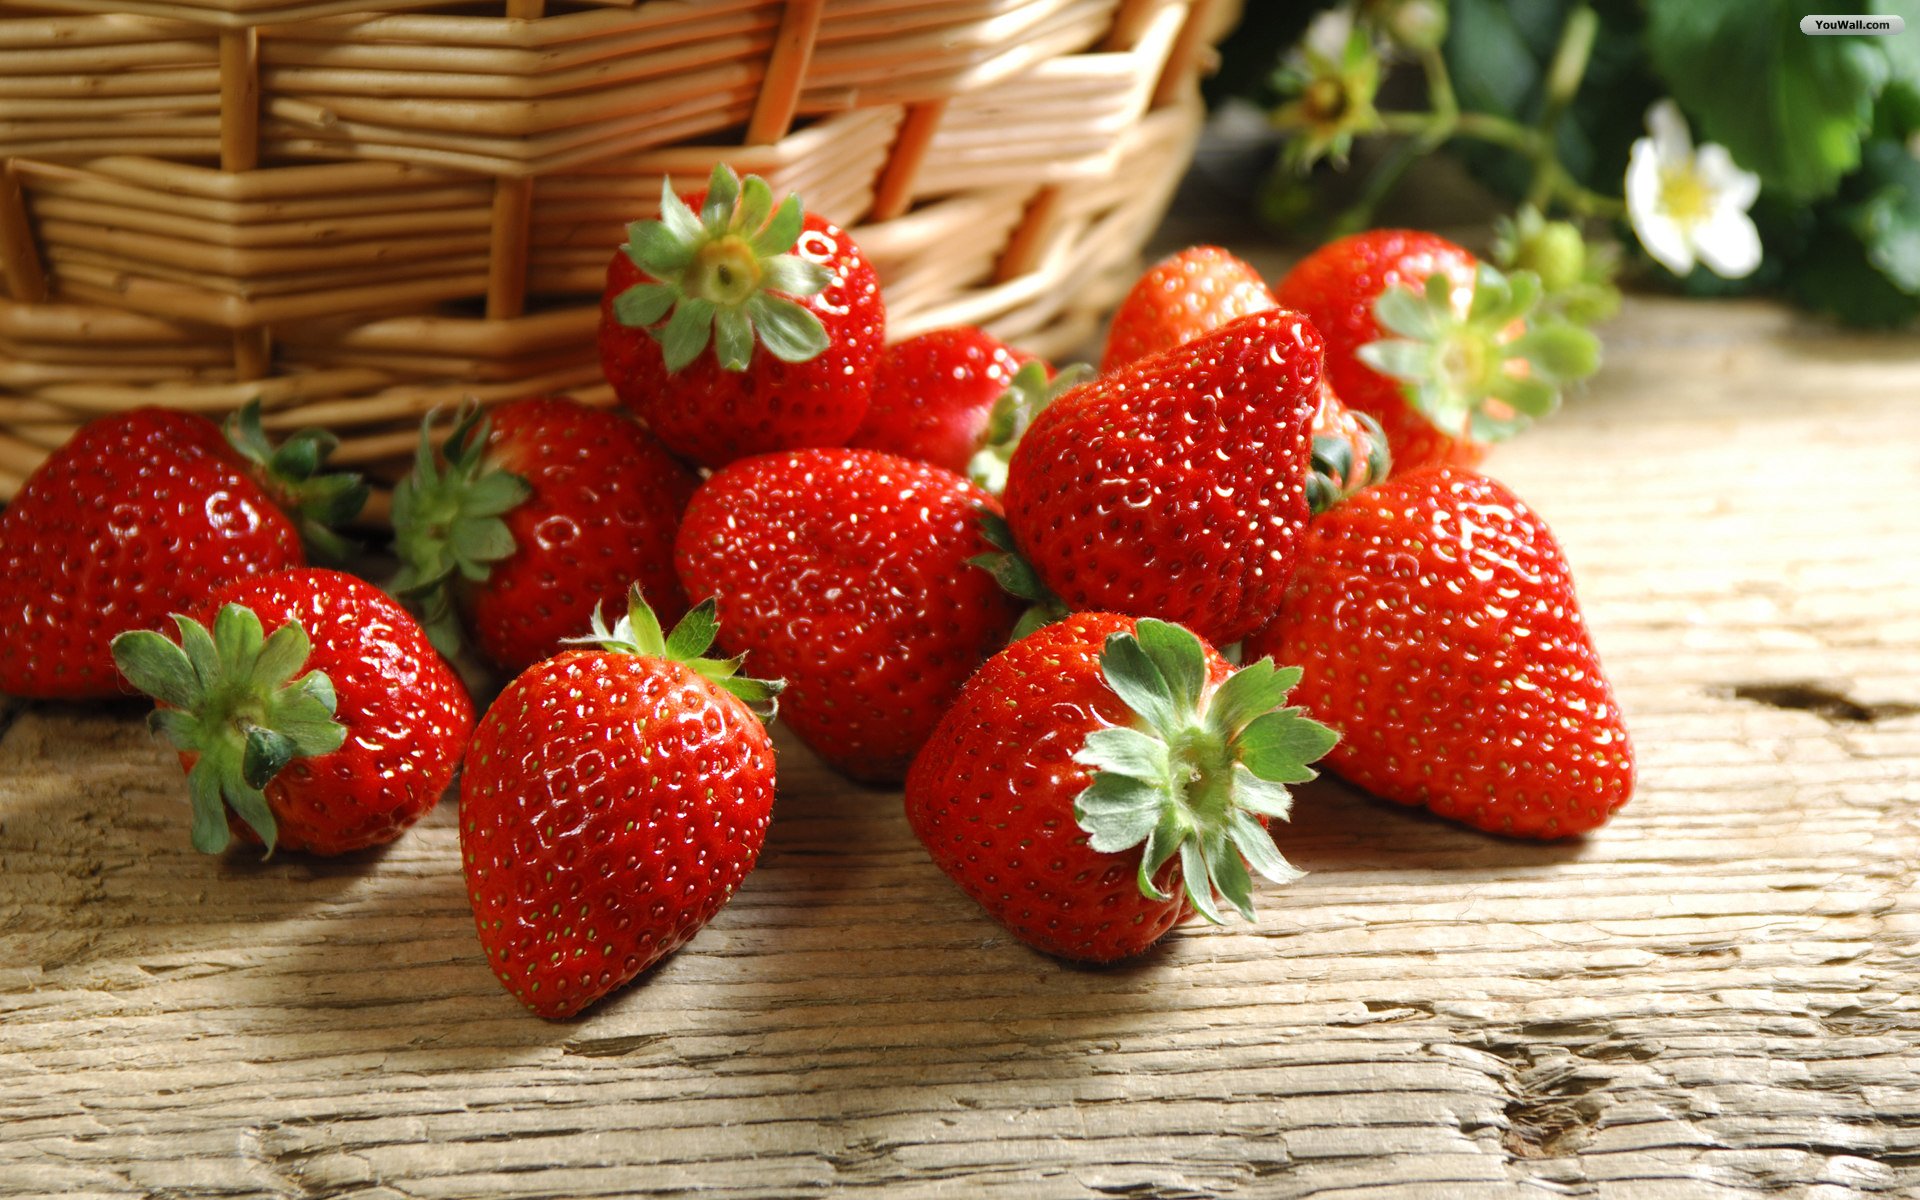 HD Cute Strawberries in The Basket Wallpaper for Desktop Full Size